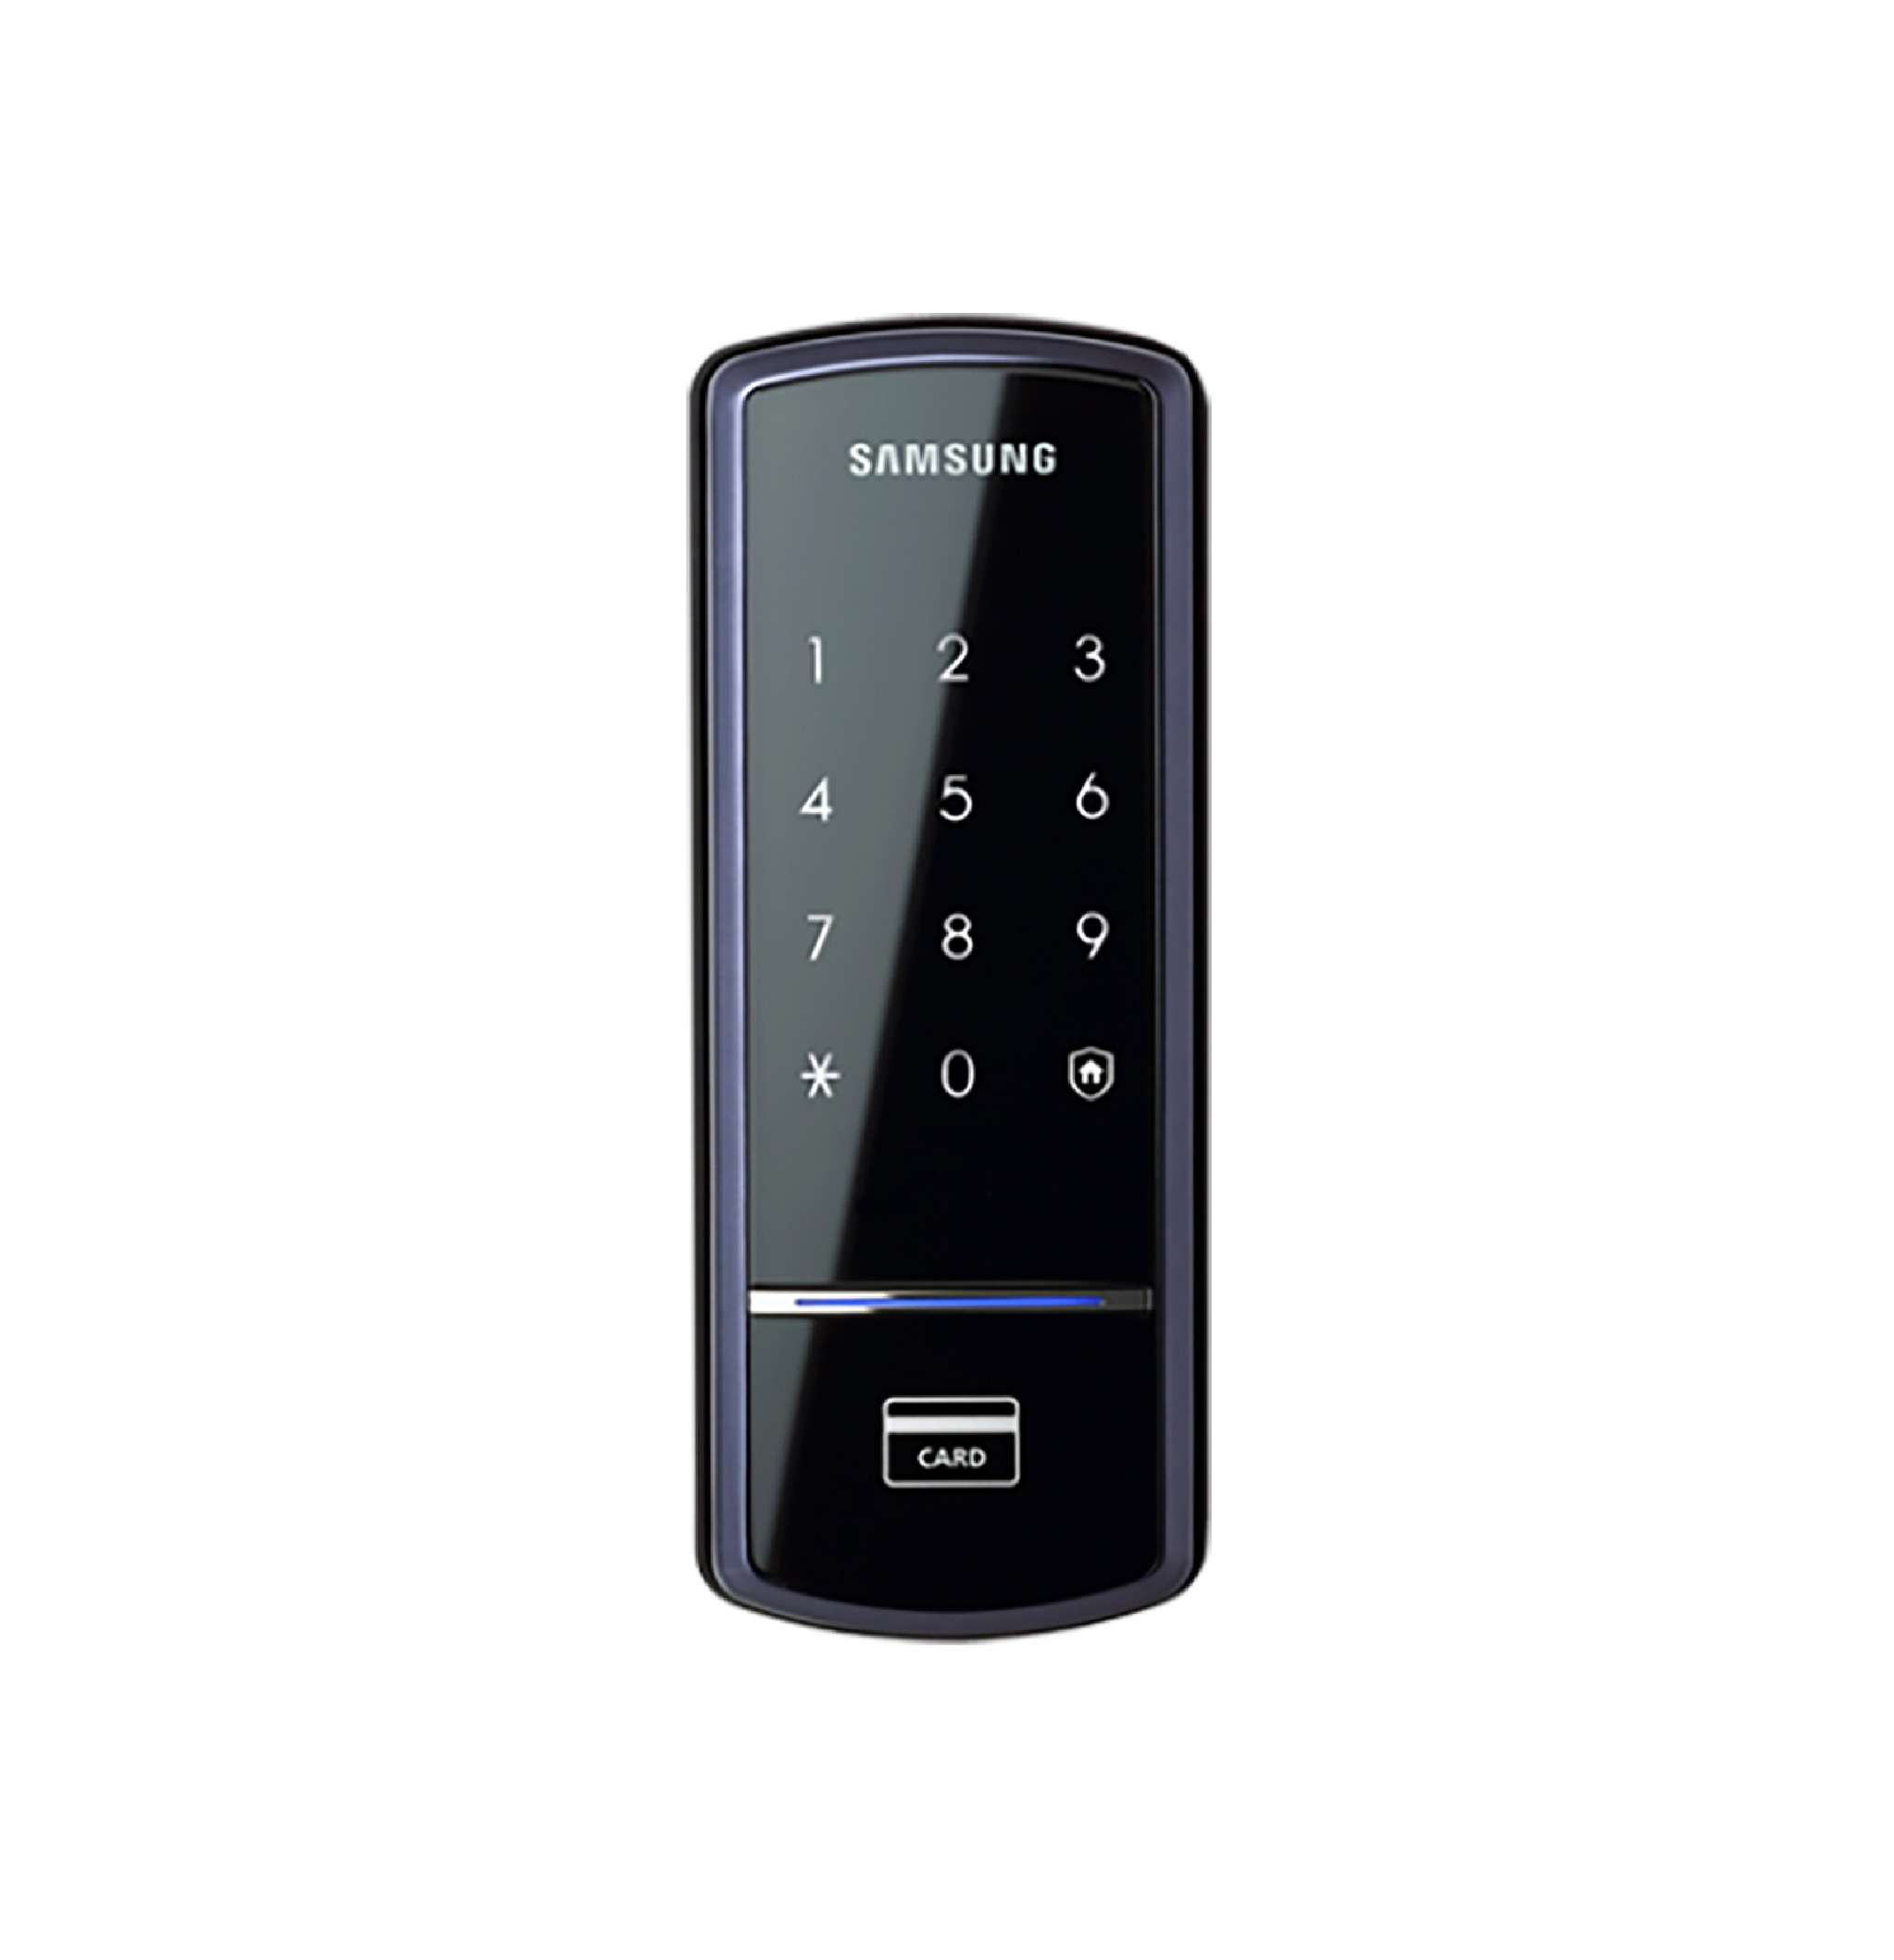 Samsung SHS-1321